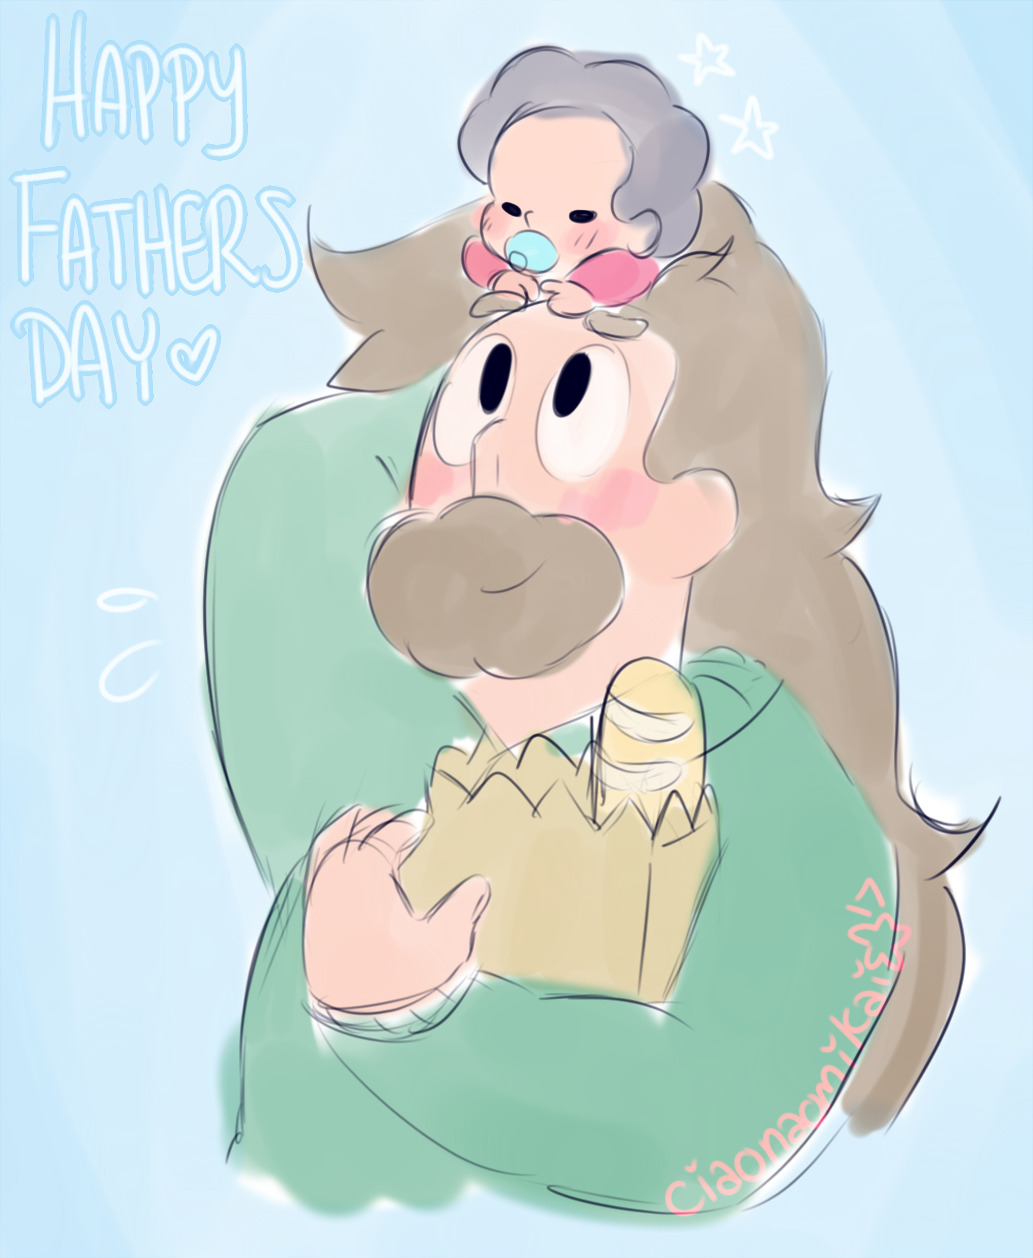 ciaonaomikai: Happy Fathers Day!!! ☆○°♪